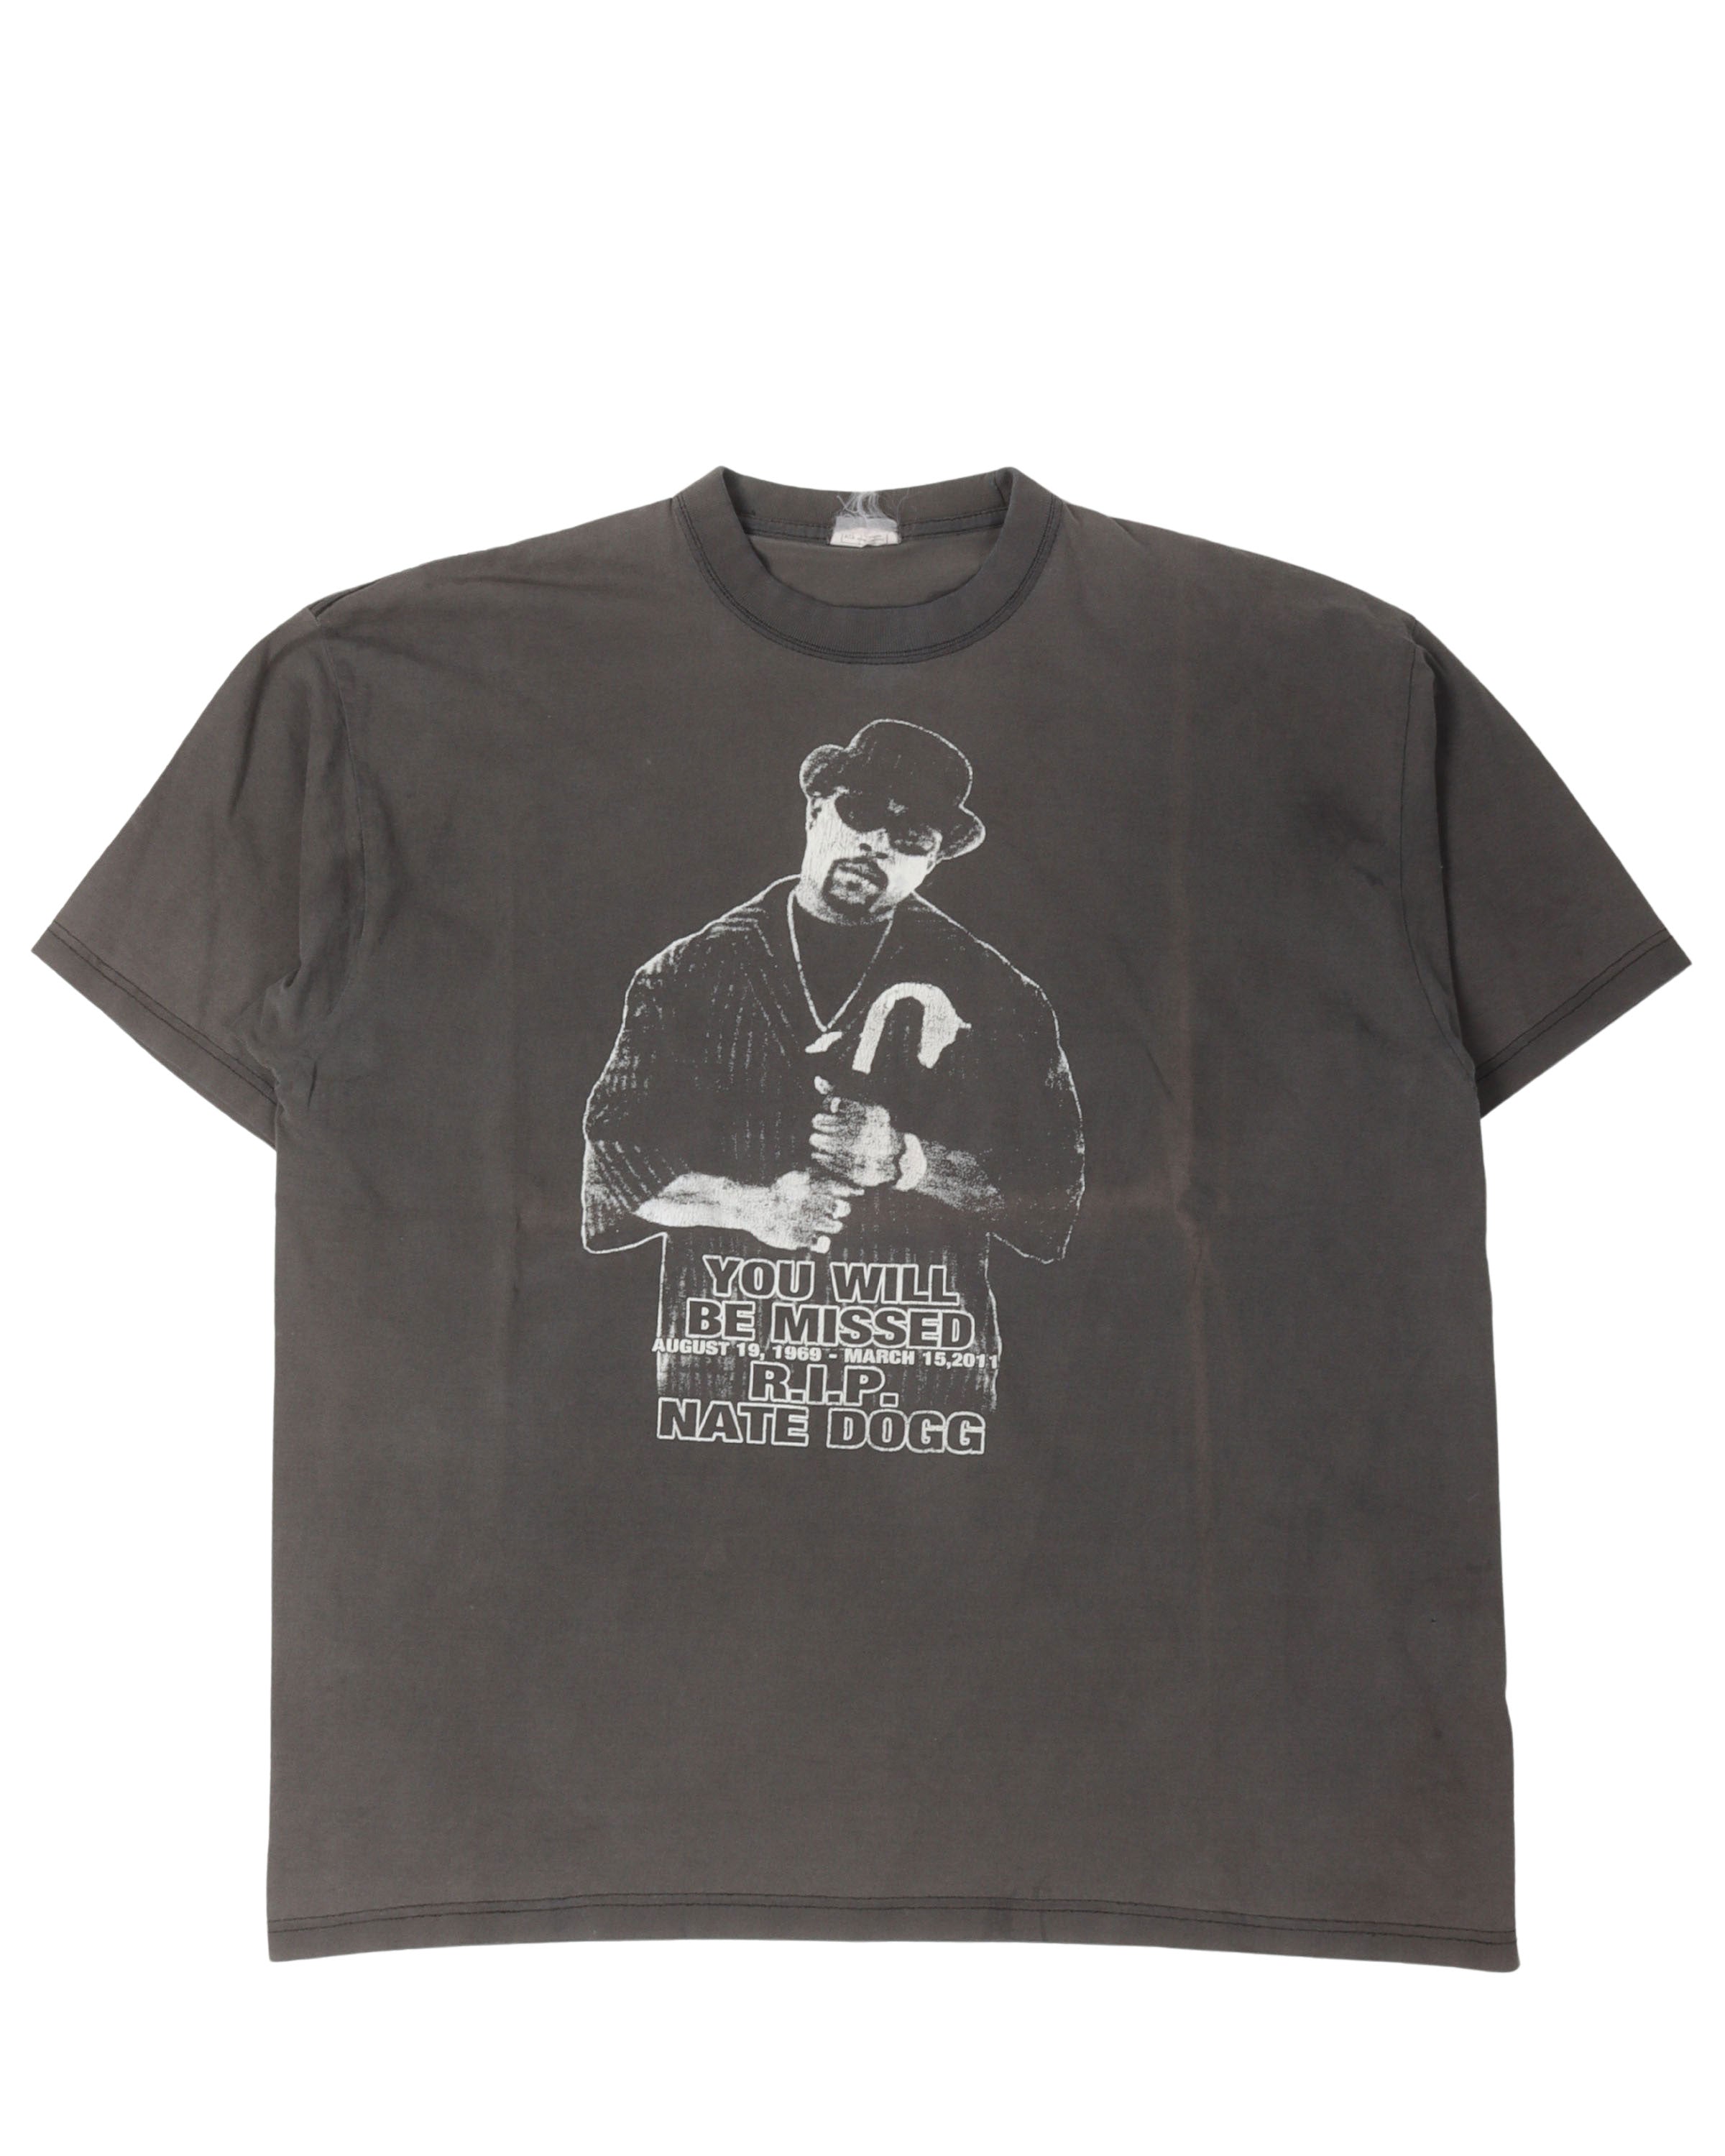 R.I.P. Nate Dogg T-Shirt